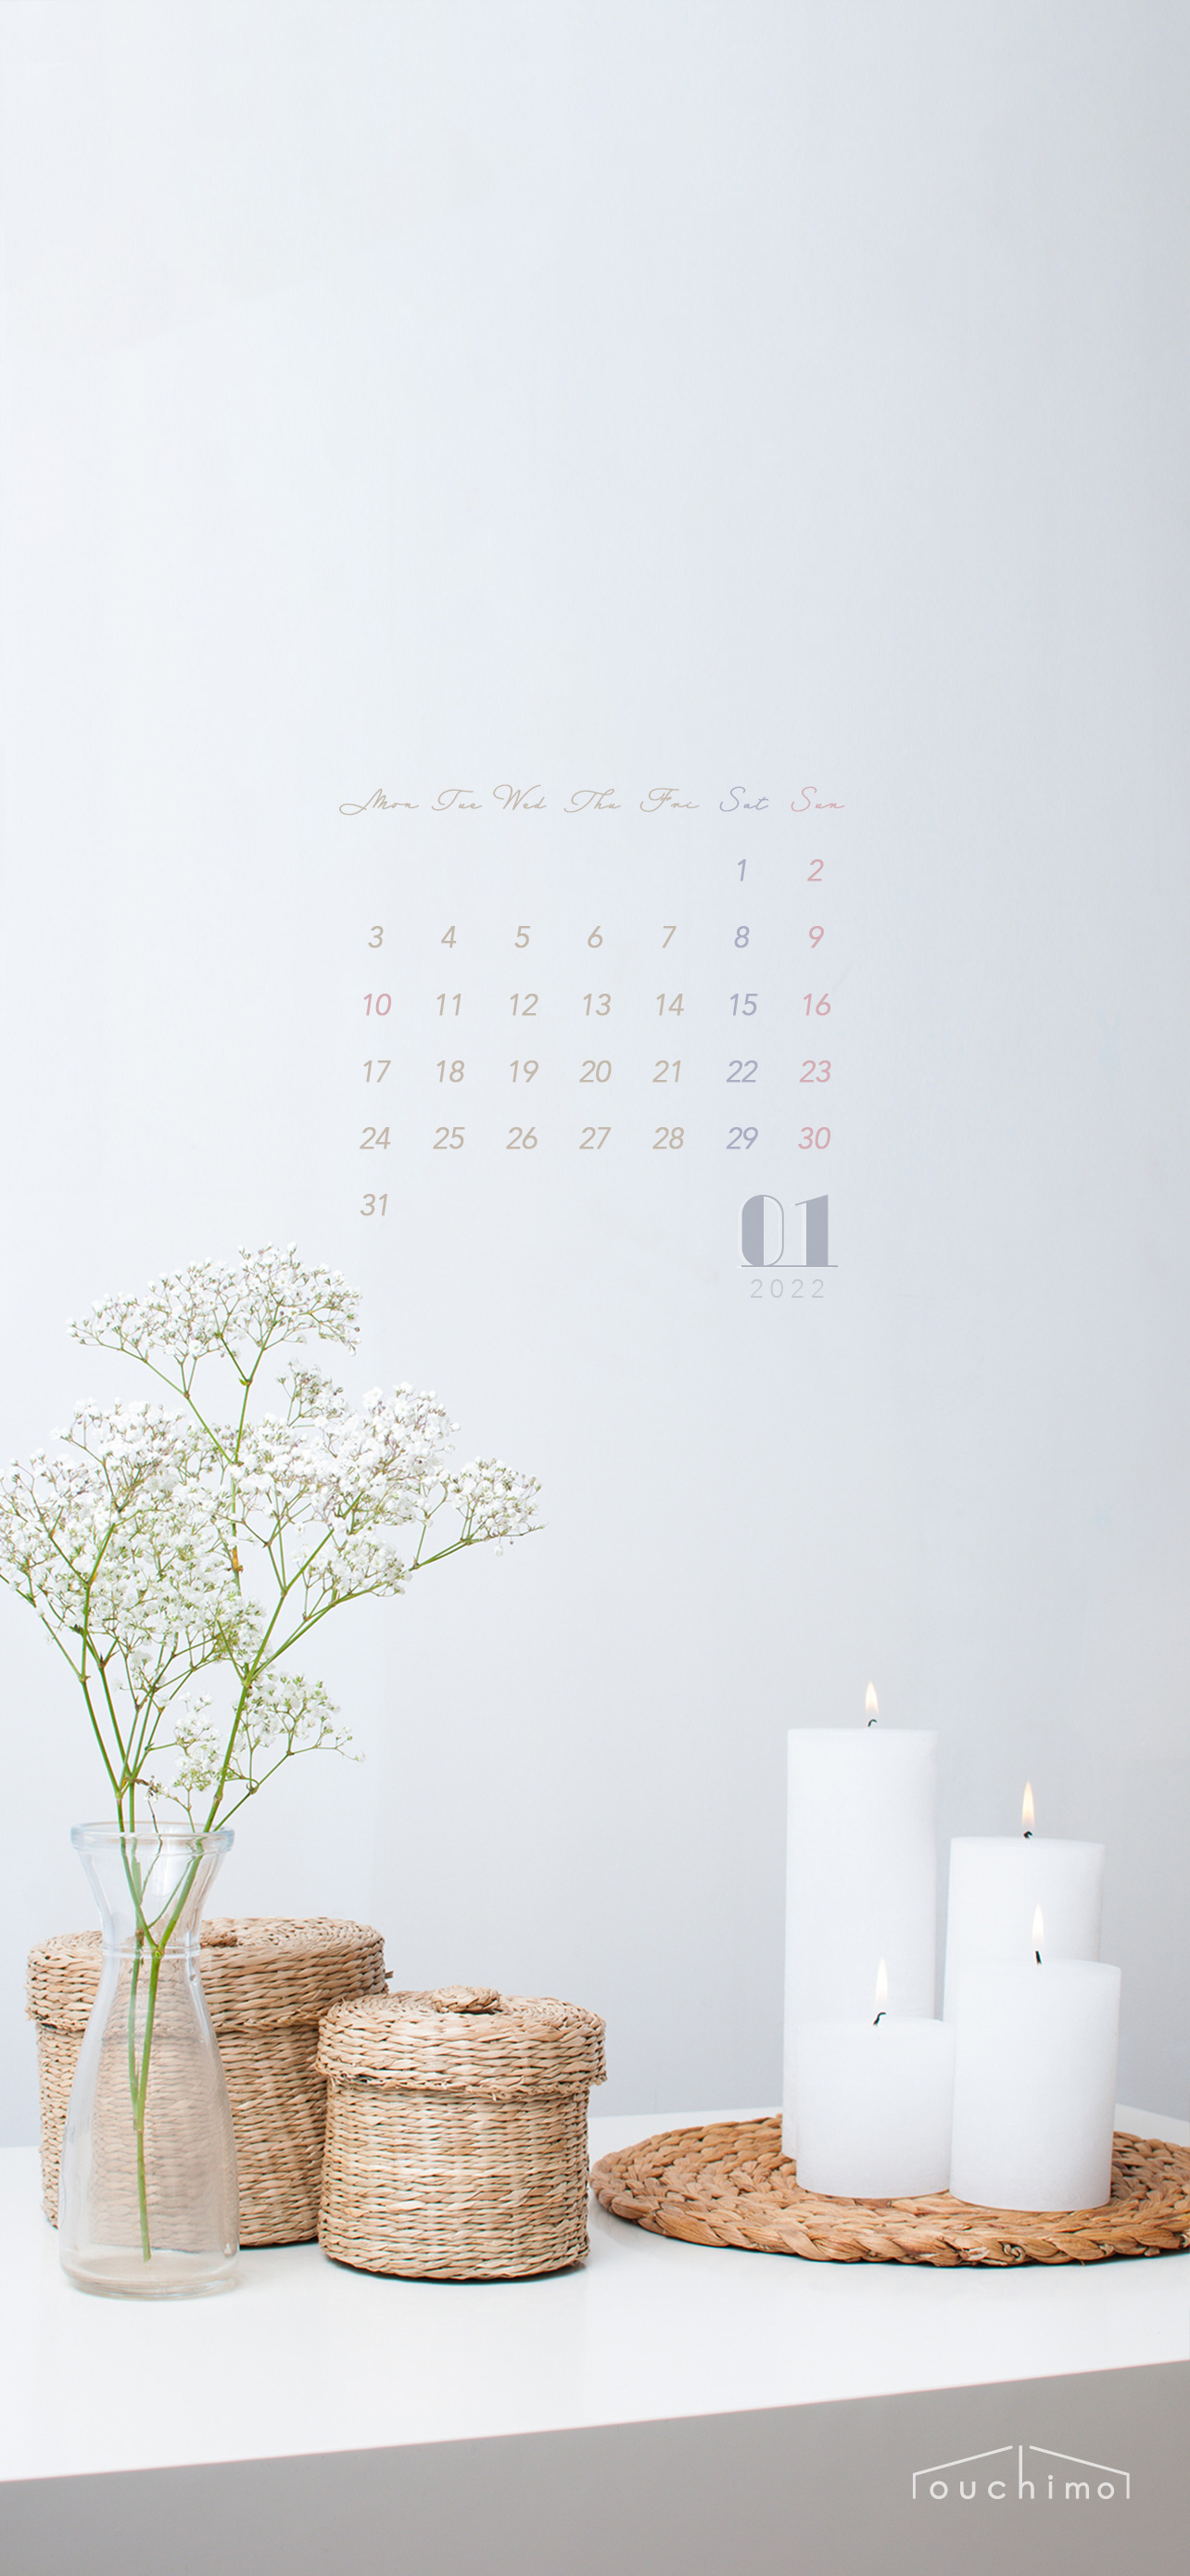 Iphone壁紙 Ouchimo特製22年1月のカレンダーできました Ouchimo